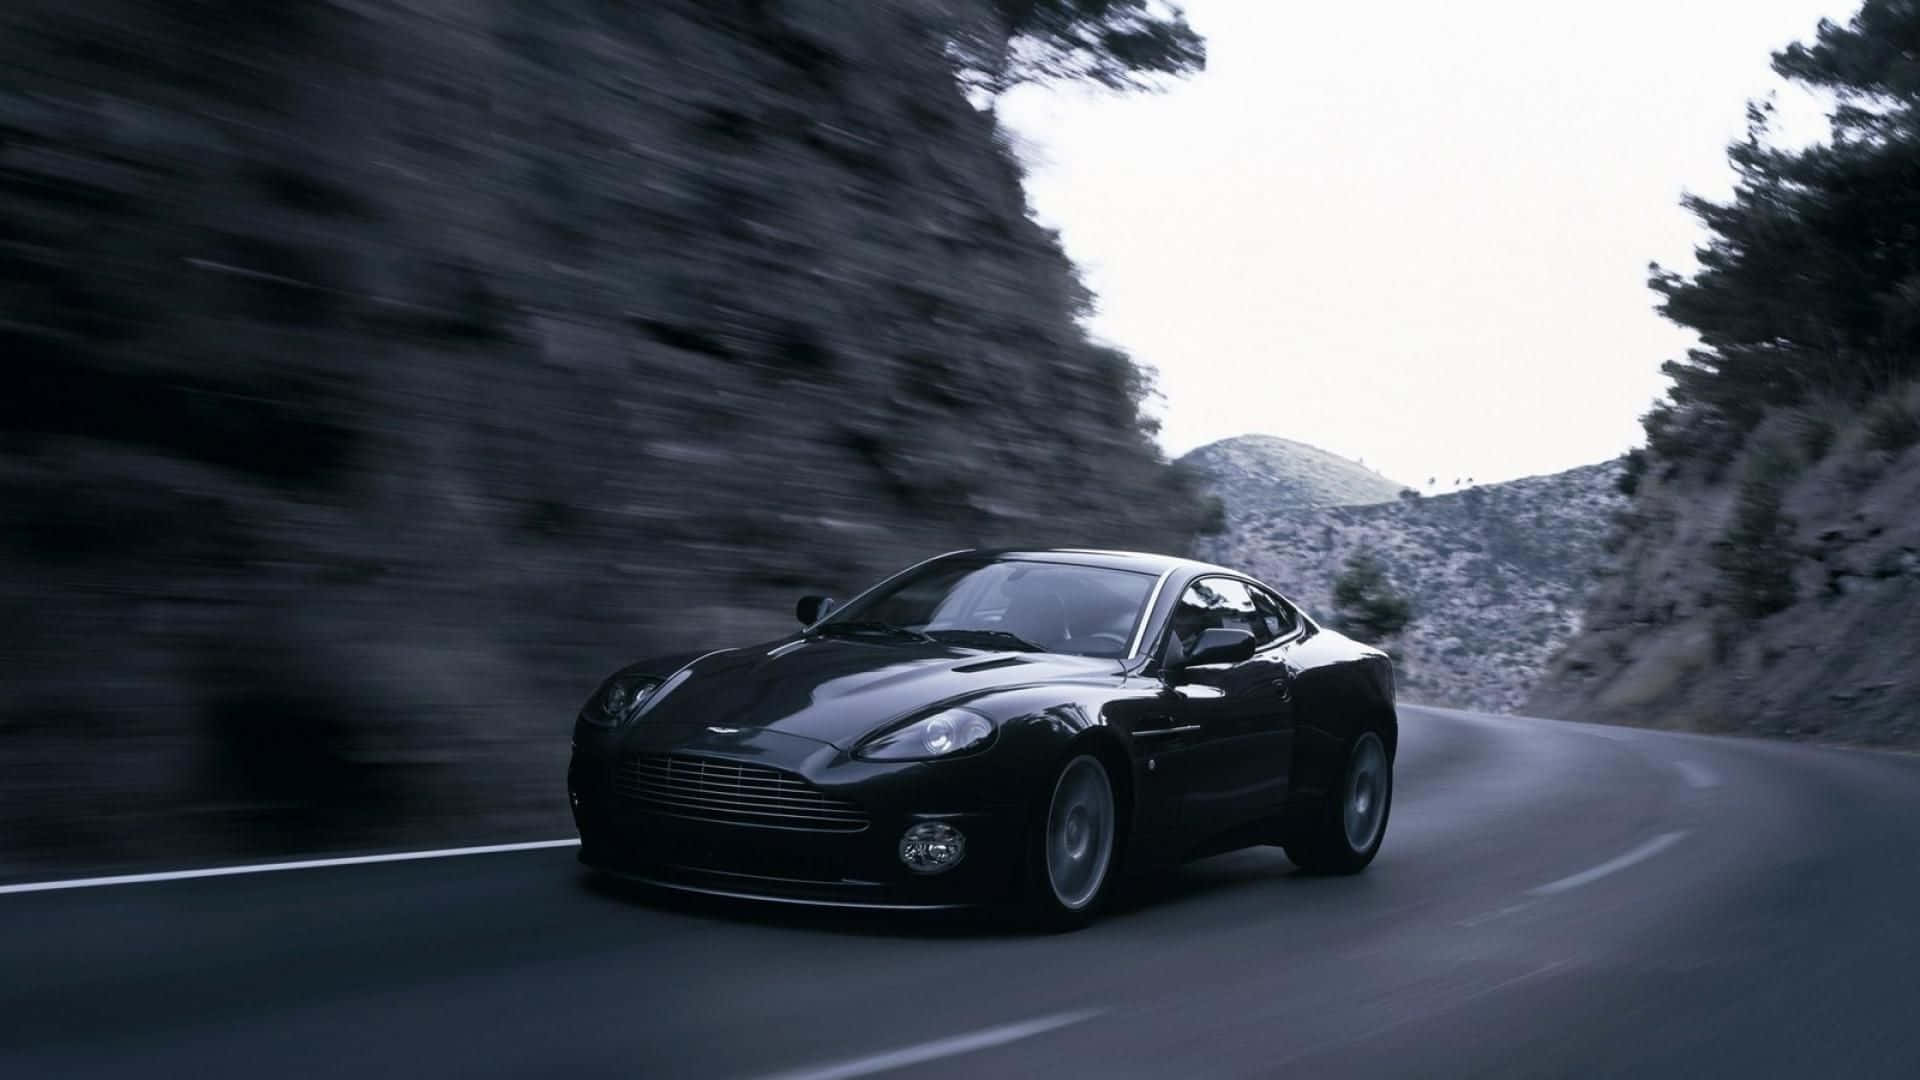 Caption: Aston Martin V12 Vantage 2021 Edition: Luxury Meets Power. Wallpaper